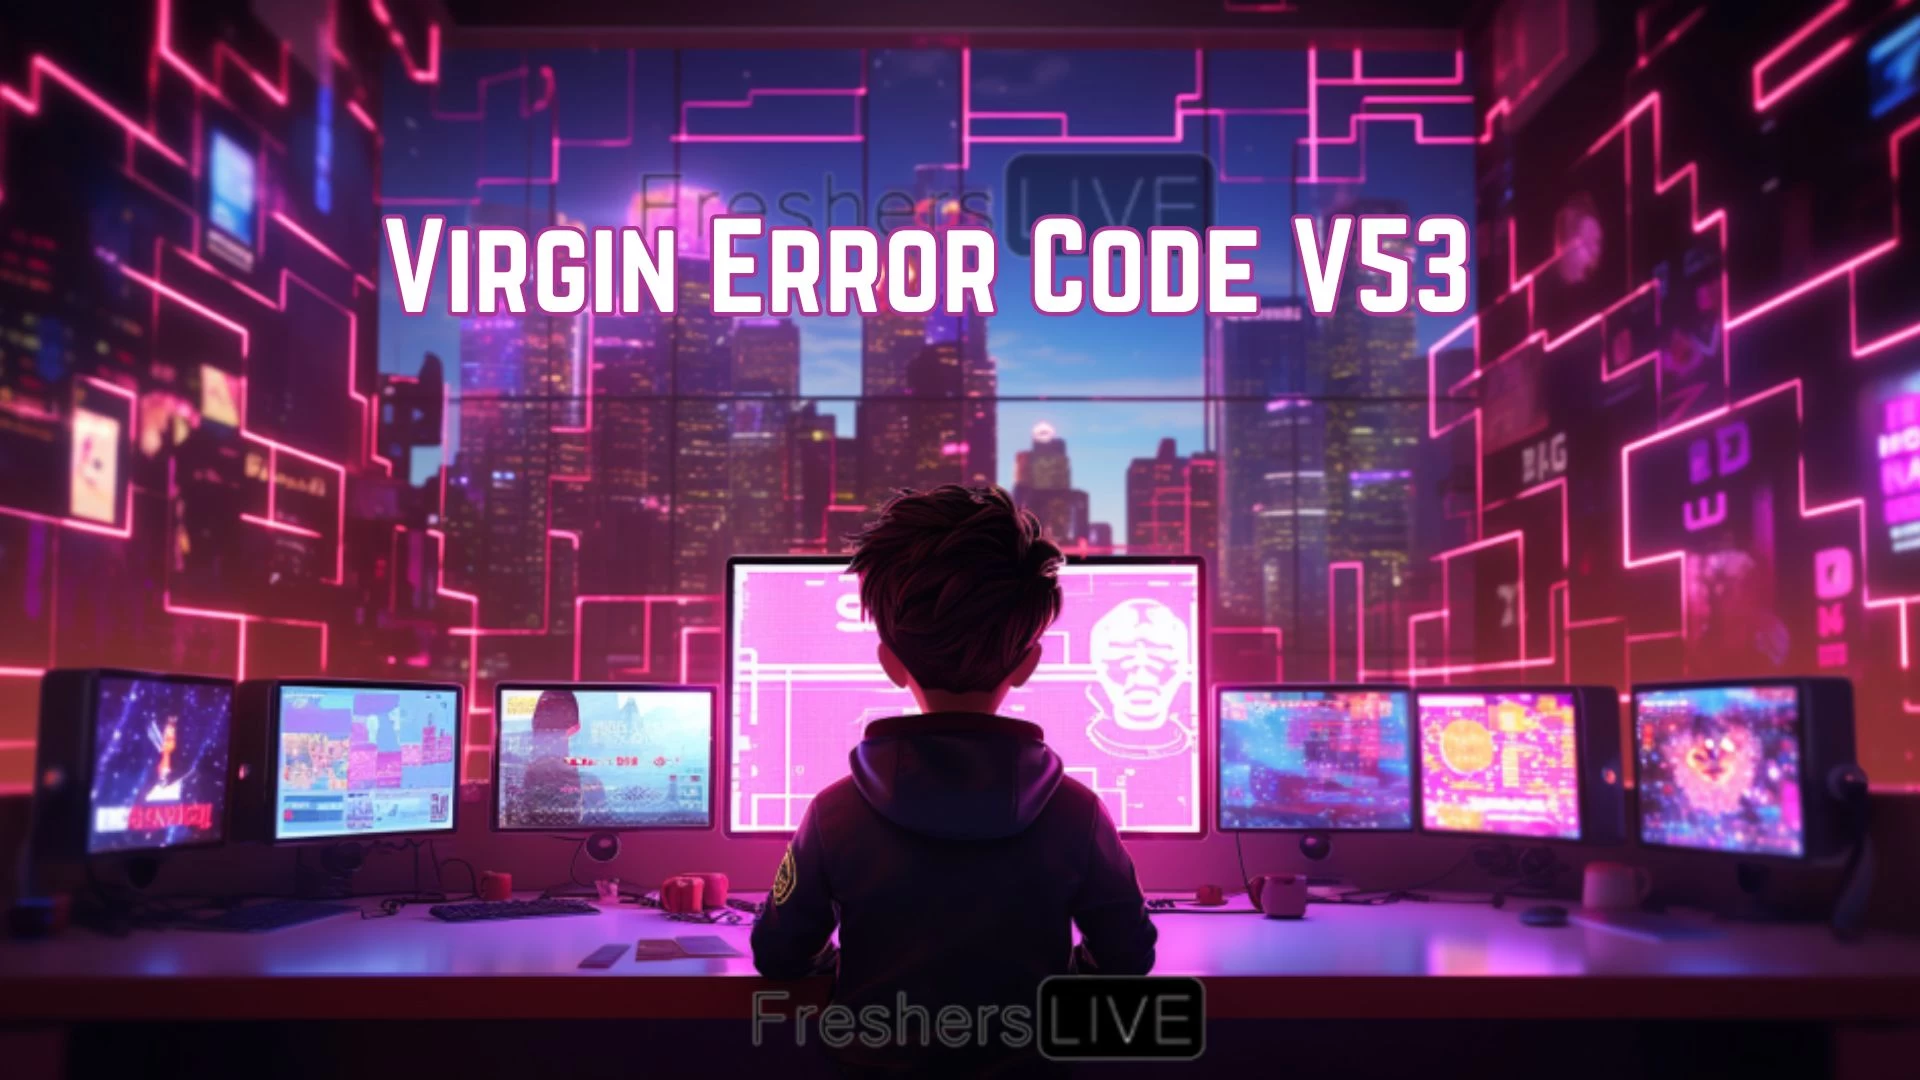 Virgin Error Code V53, How to Fix Virgin Error Code V53?